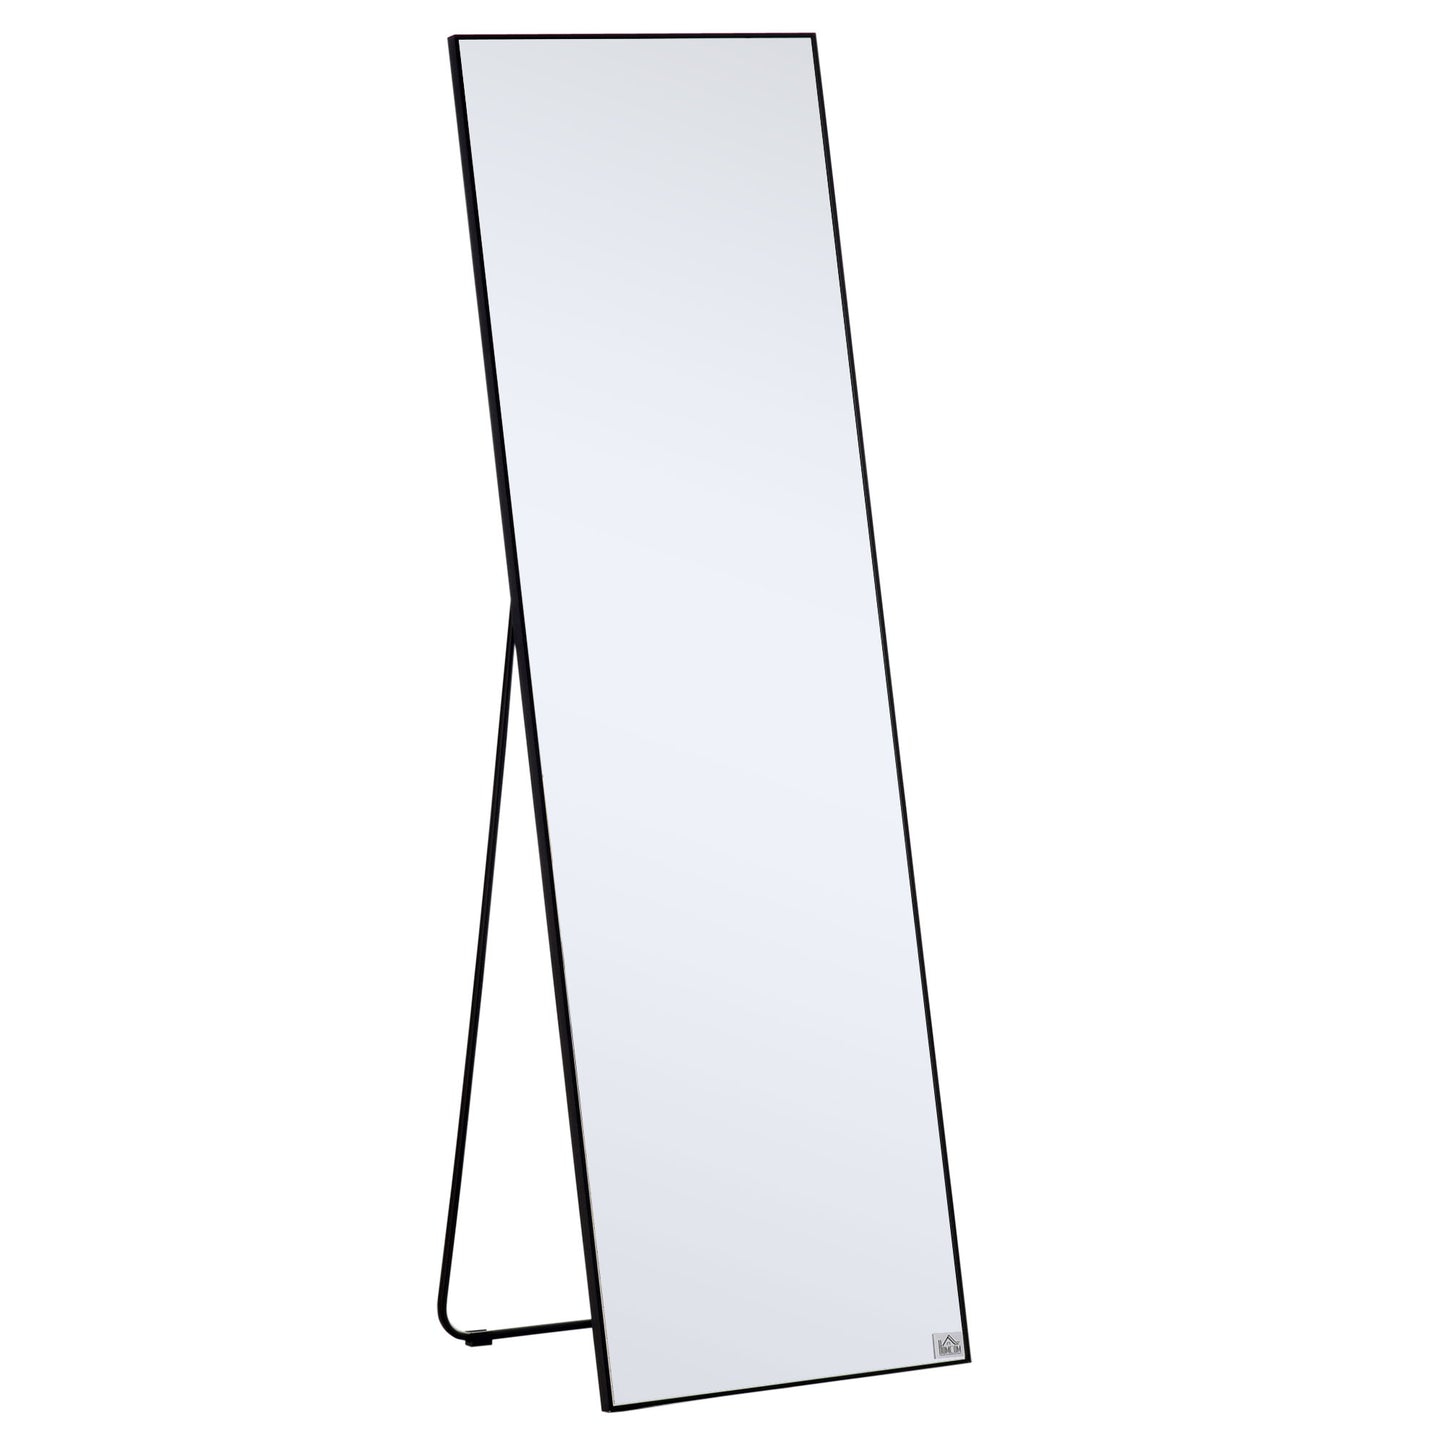 HOMCOM Full Length Mirror Floor Standing or Wall Mount Dressing Mirror Bedroom Black